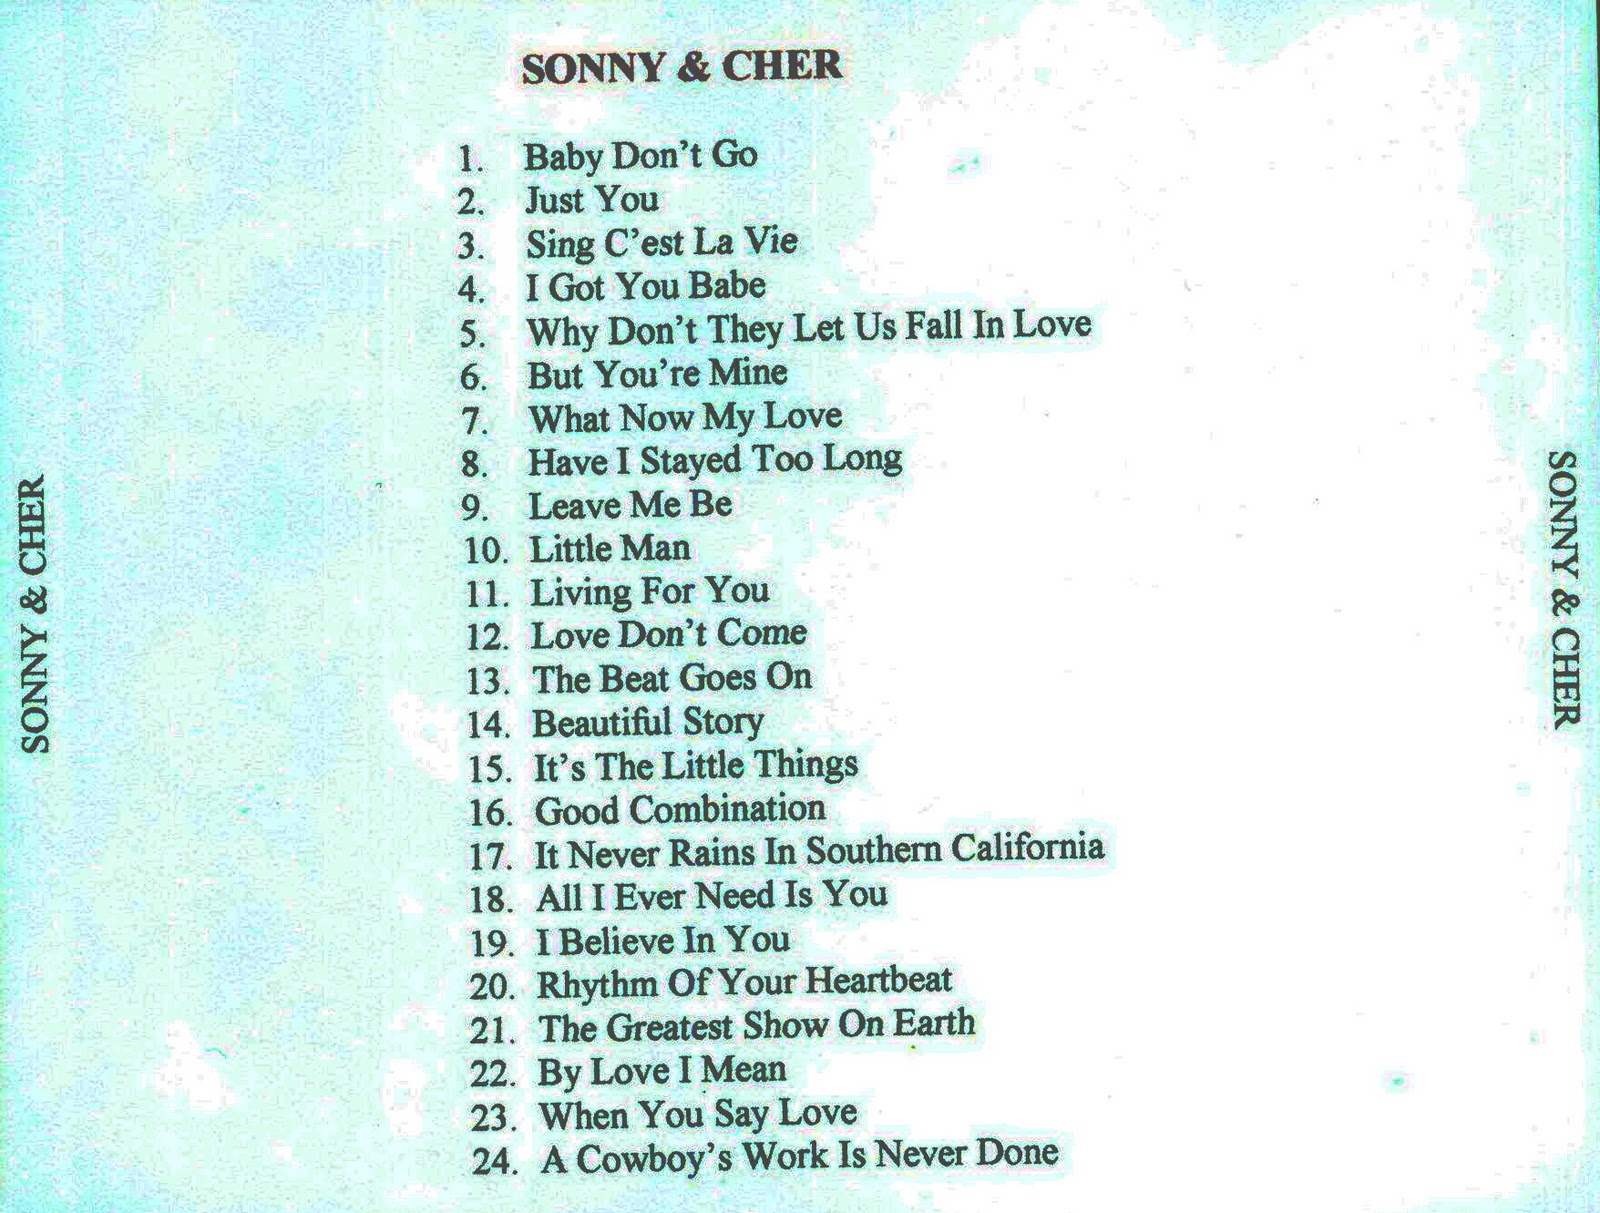 Шер little man. Sonny cher little man 1966. Little man Sonny & cher. Сонни Боно и Шер little man 1967. Sonny & cher little man винил.